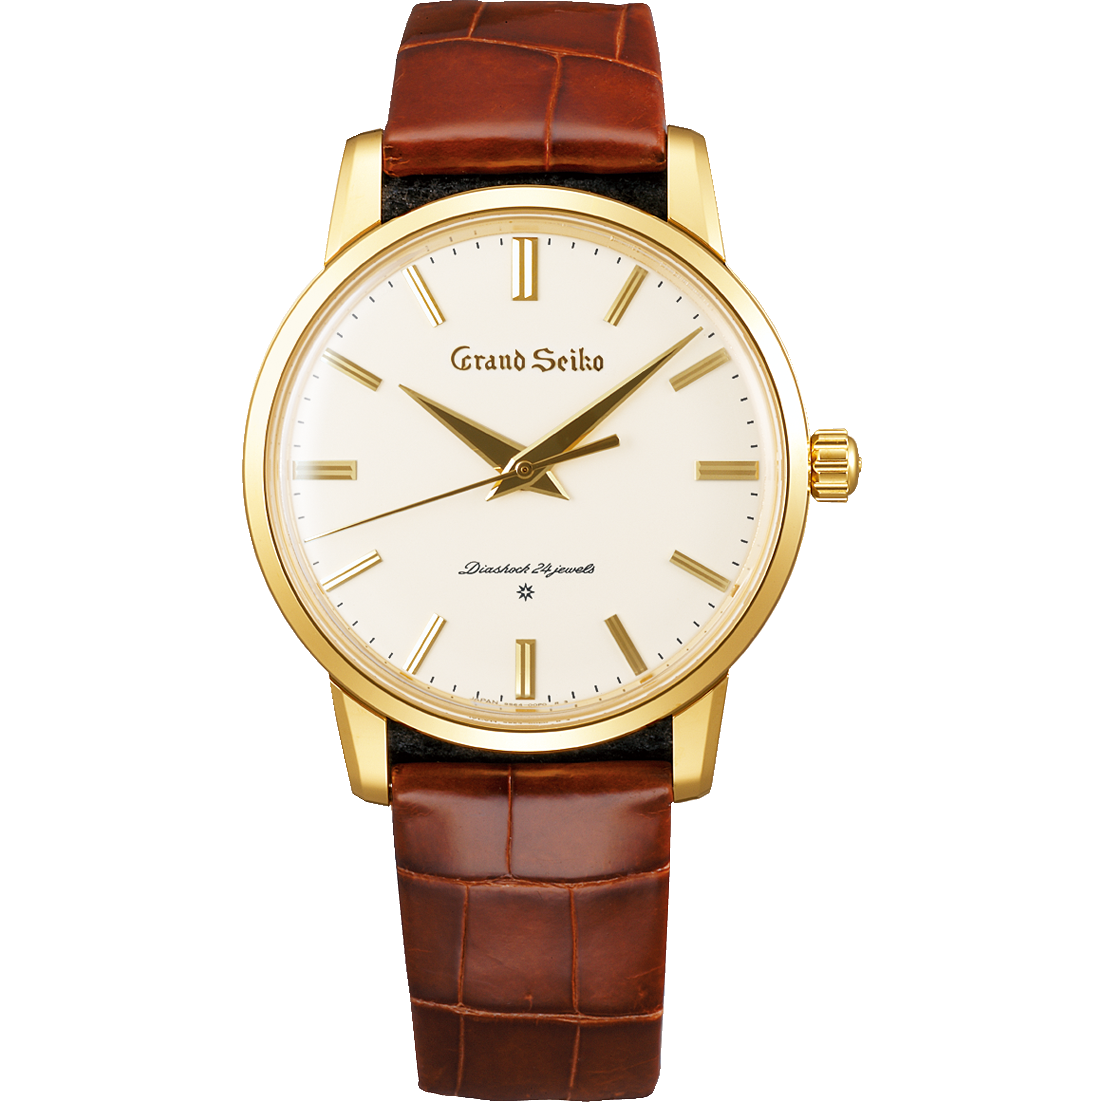 Grand Seiko SBGW258 mechanical 9S64, 18k yellow gold case, white dial, men's watches